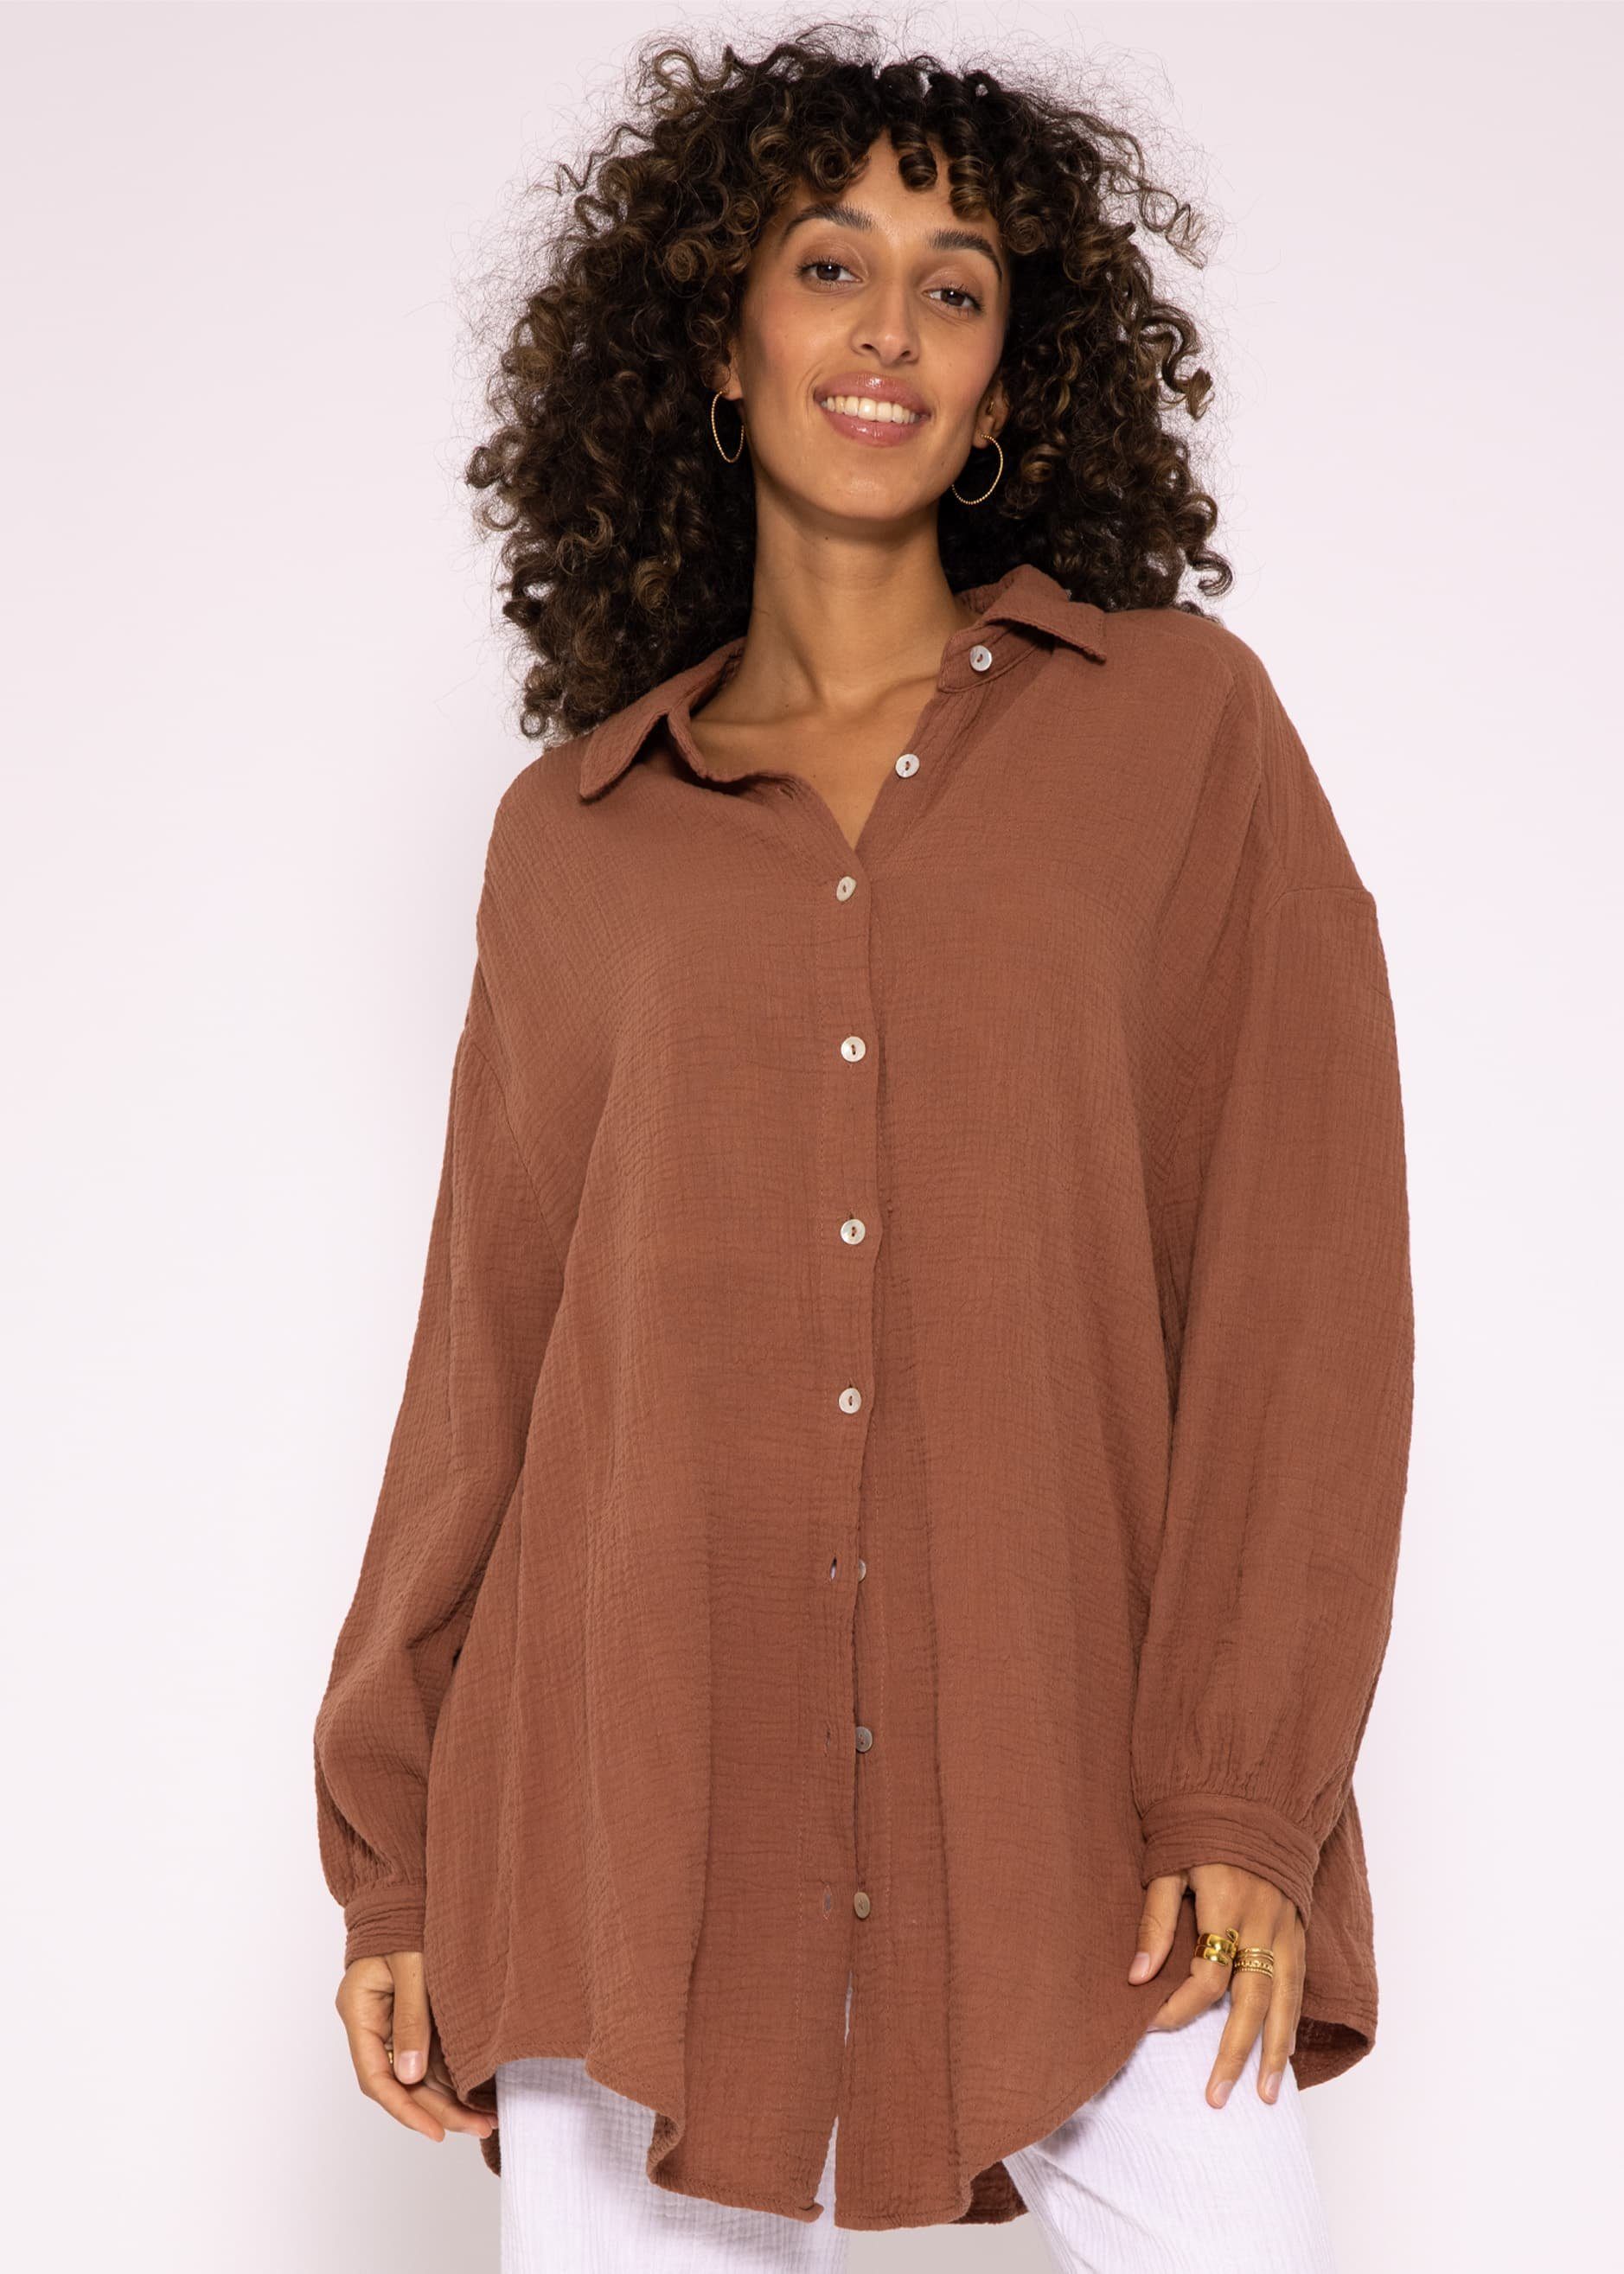 SASSYCLASSY Longbluse Oversize Musselin Bluse Damen Langarm Hemdbluse lang aus Baumwolle mit V-Ausschnitt, One Size (Gr. 36-48) Cafelatte